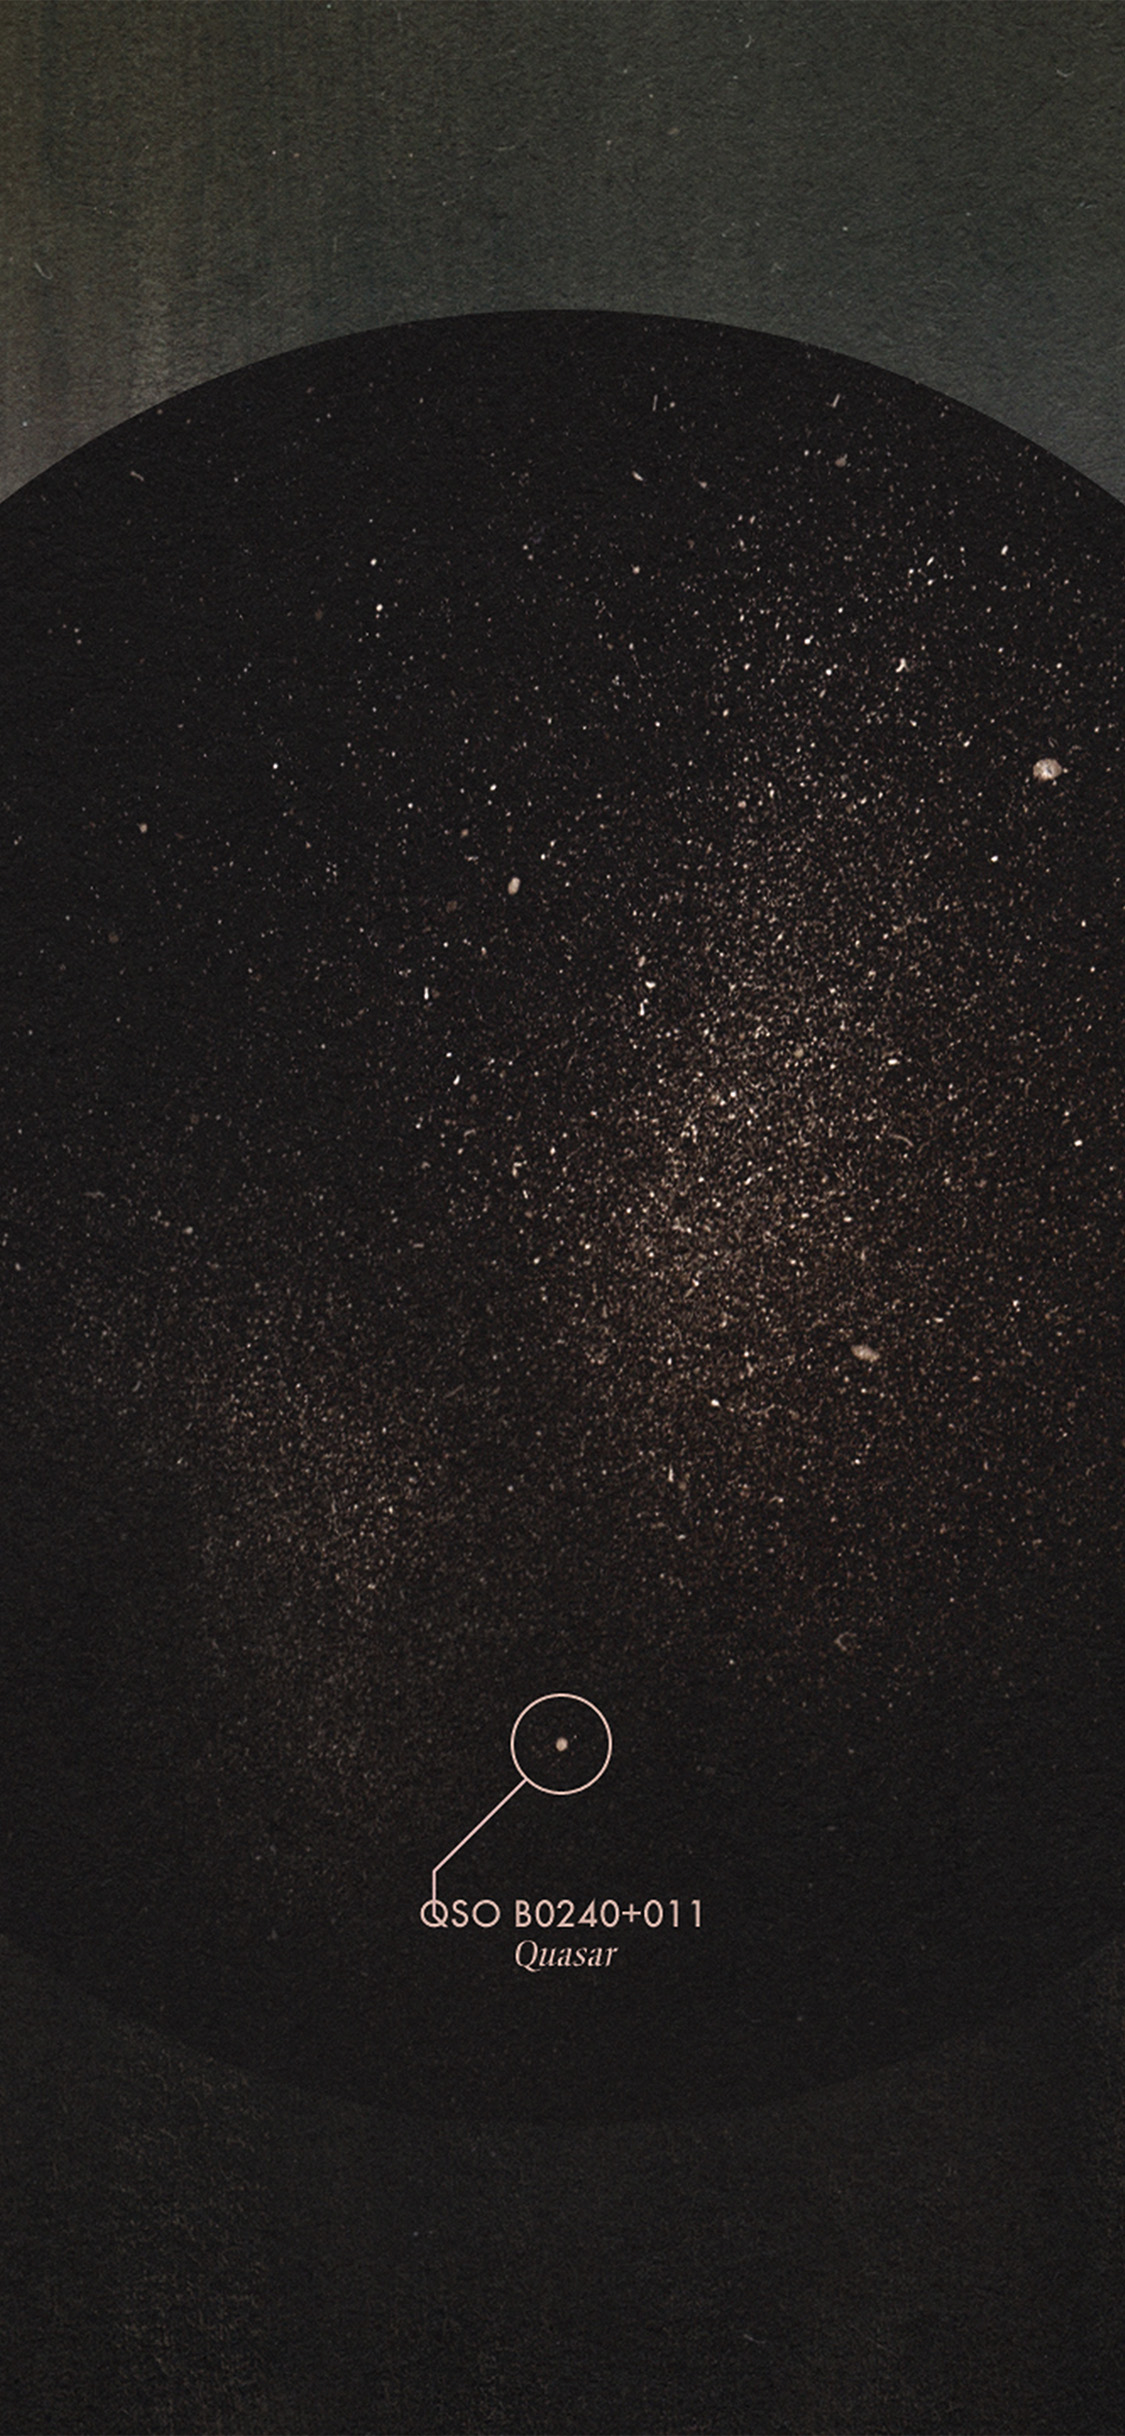 iPhone X wallpaper. simple minimal space circle art illustration dark